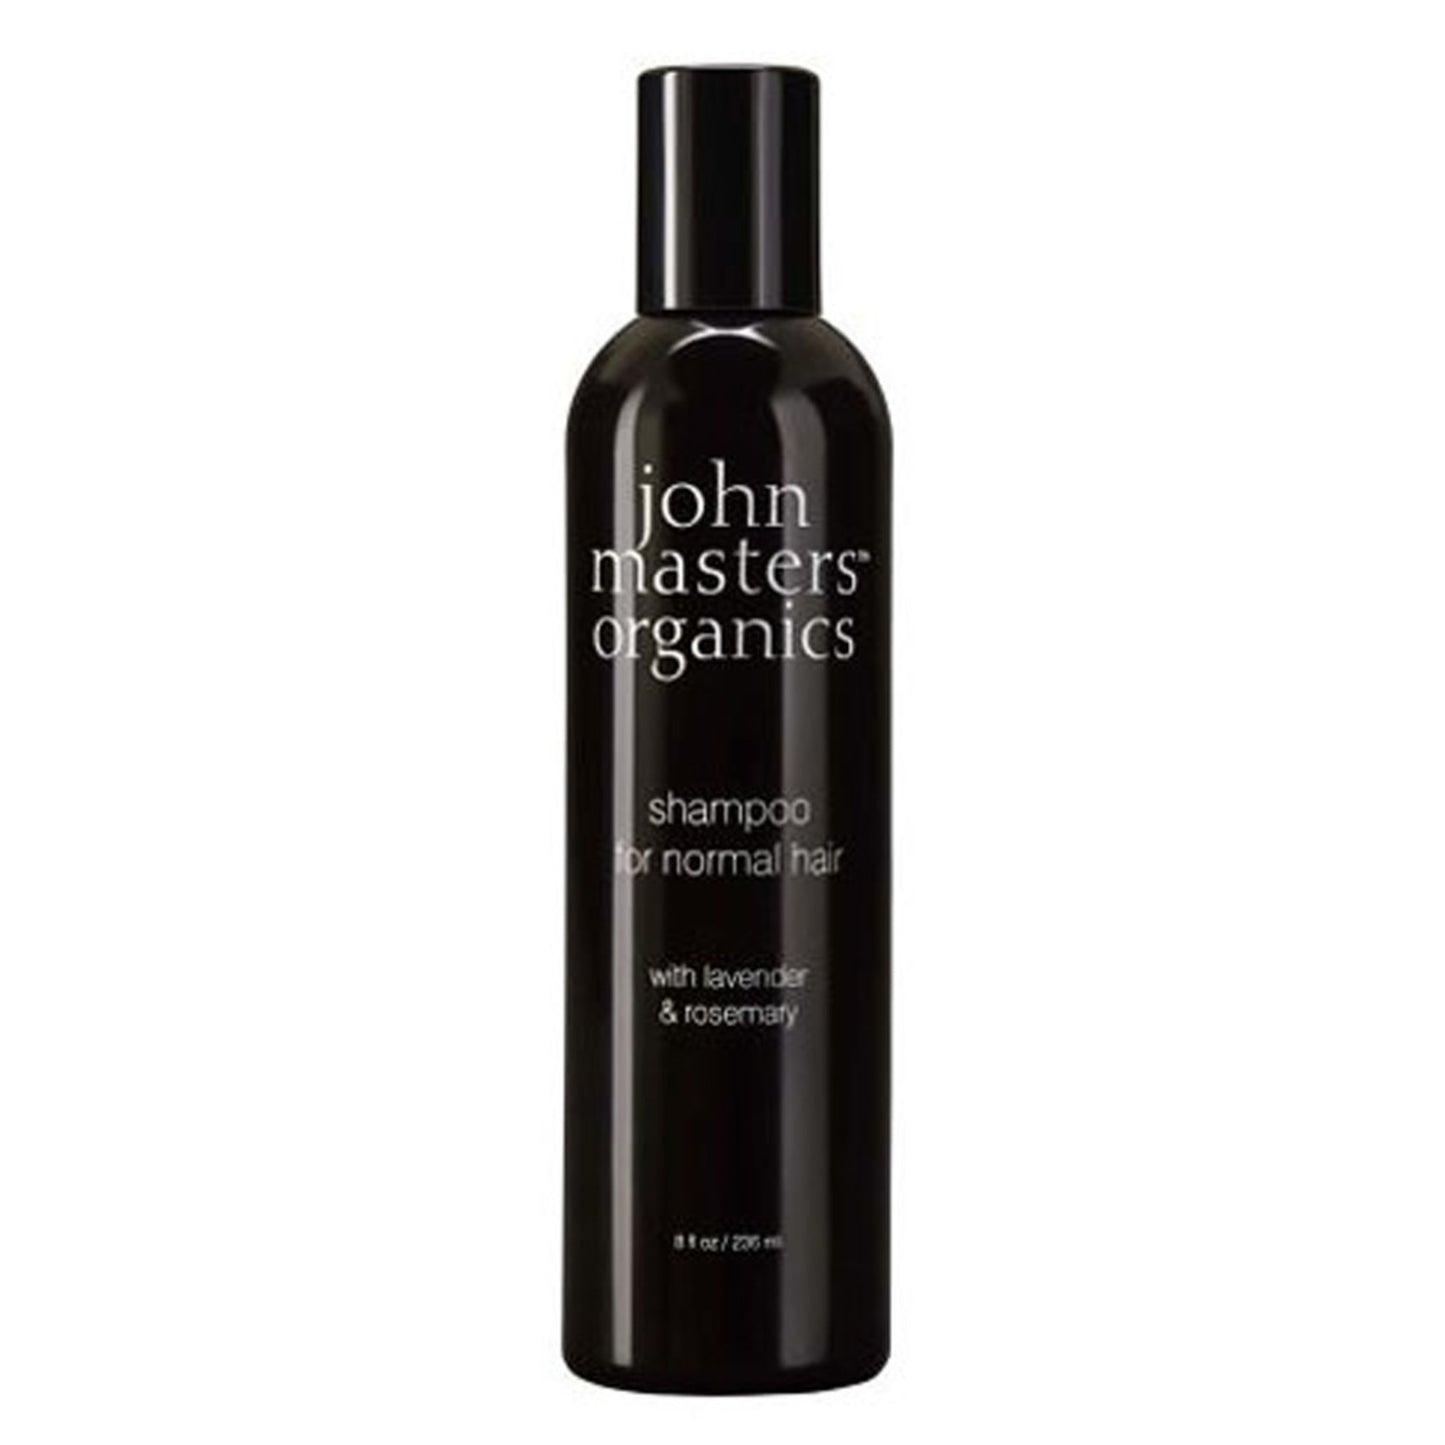 John Masters Organics Shampoo for Normal Hair with Lavender Rosemary